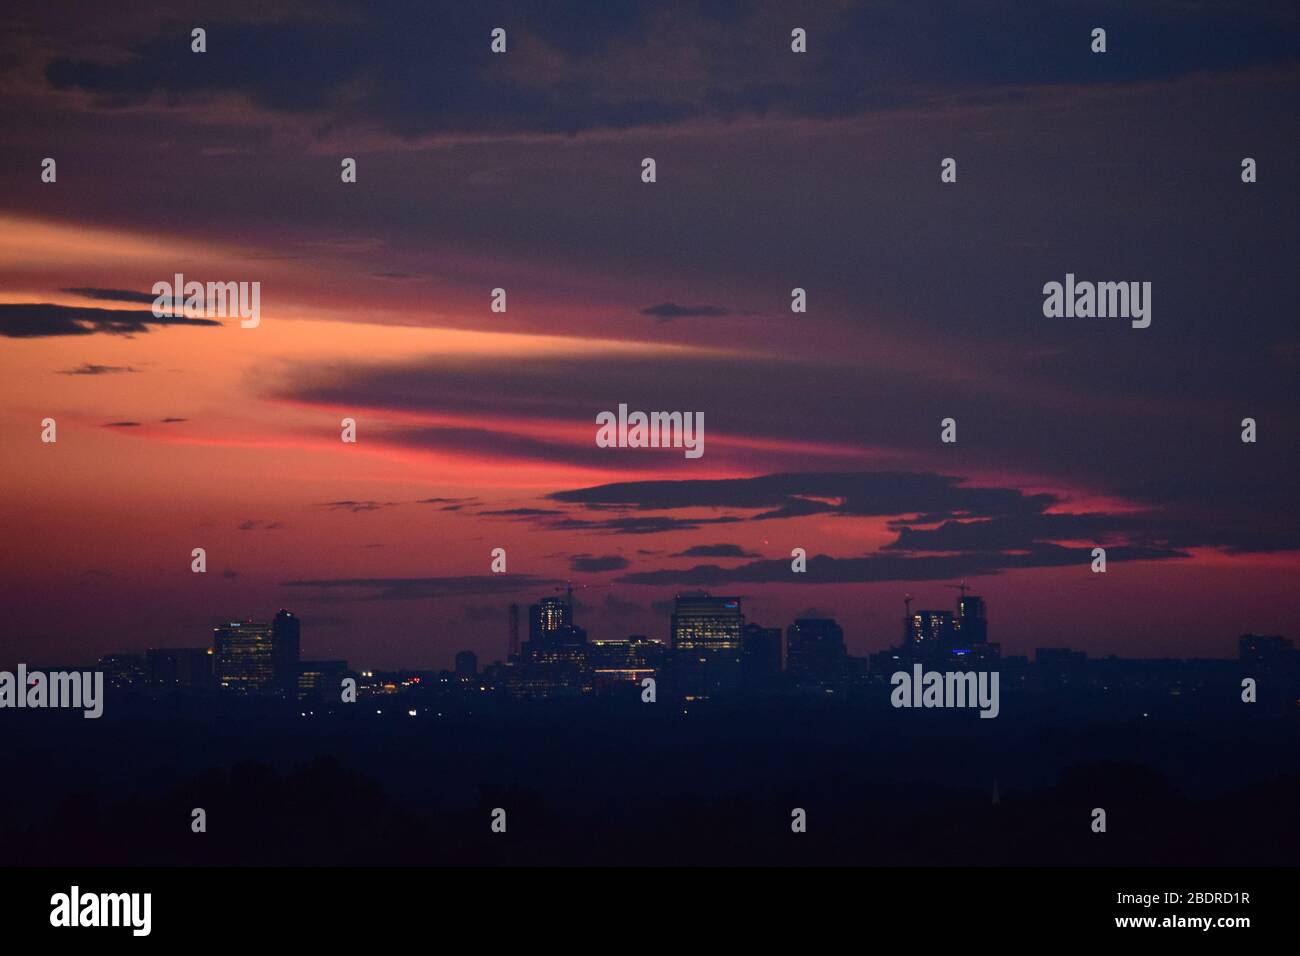 Arlington, VA Skyline at Dusk from a Distance Stock Photo